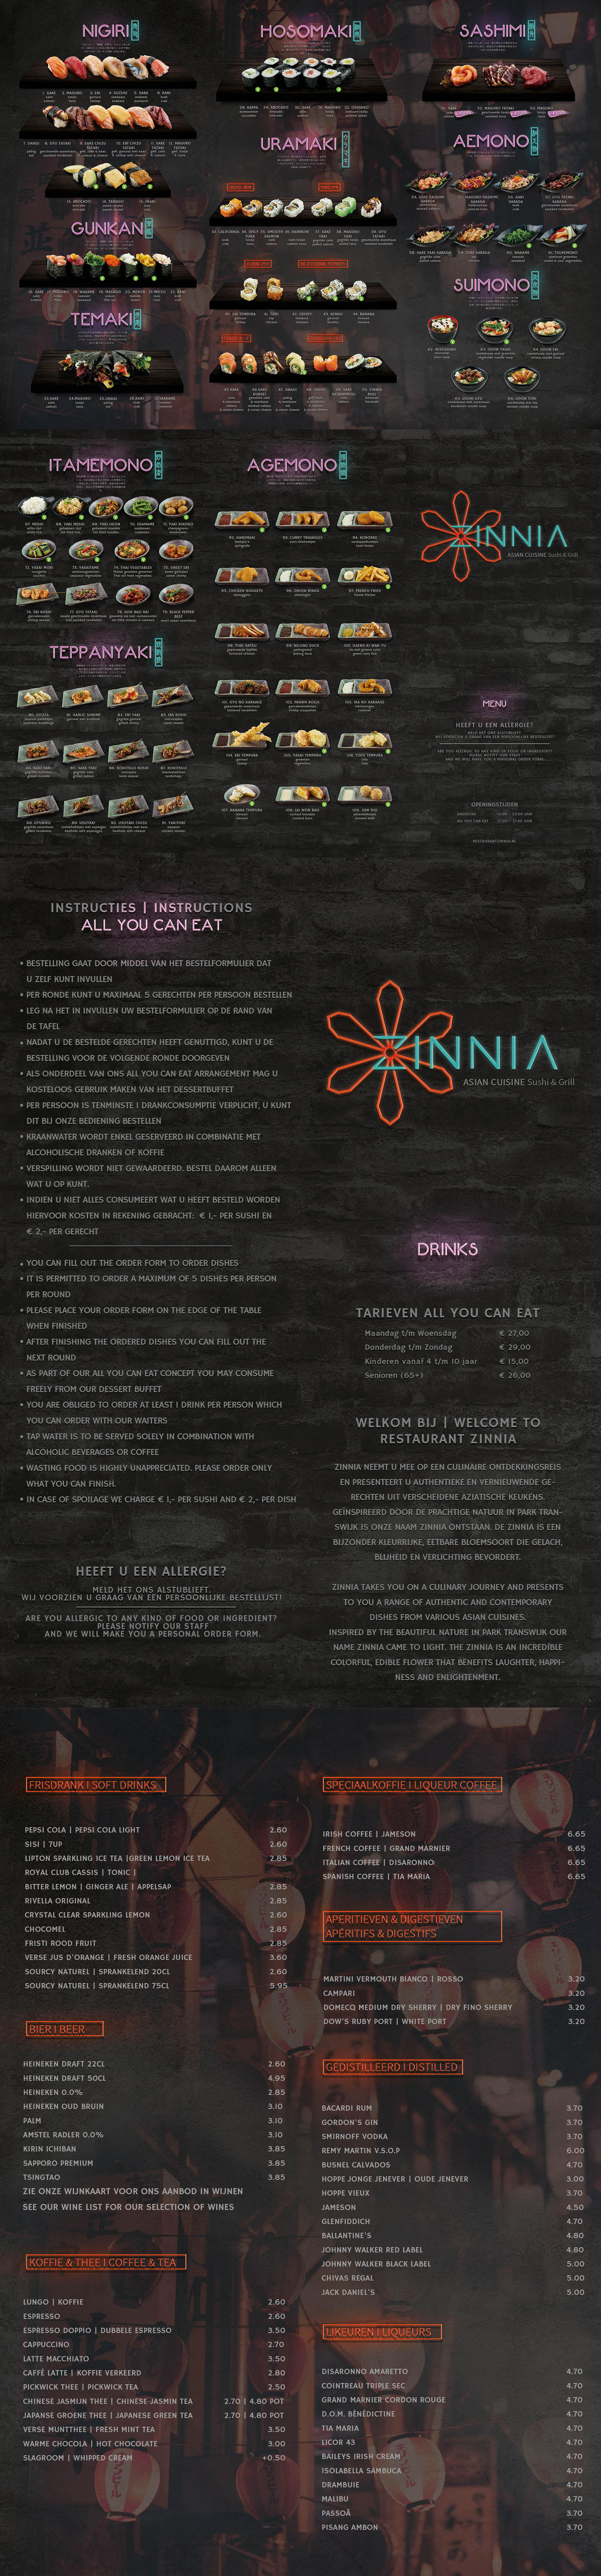 Foto's Zinnia Restaurant